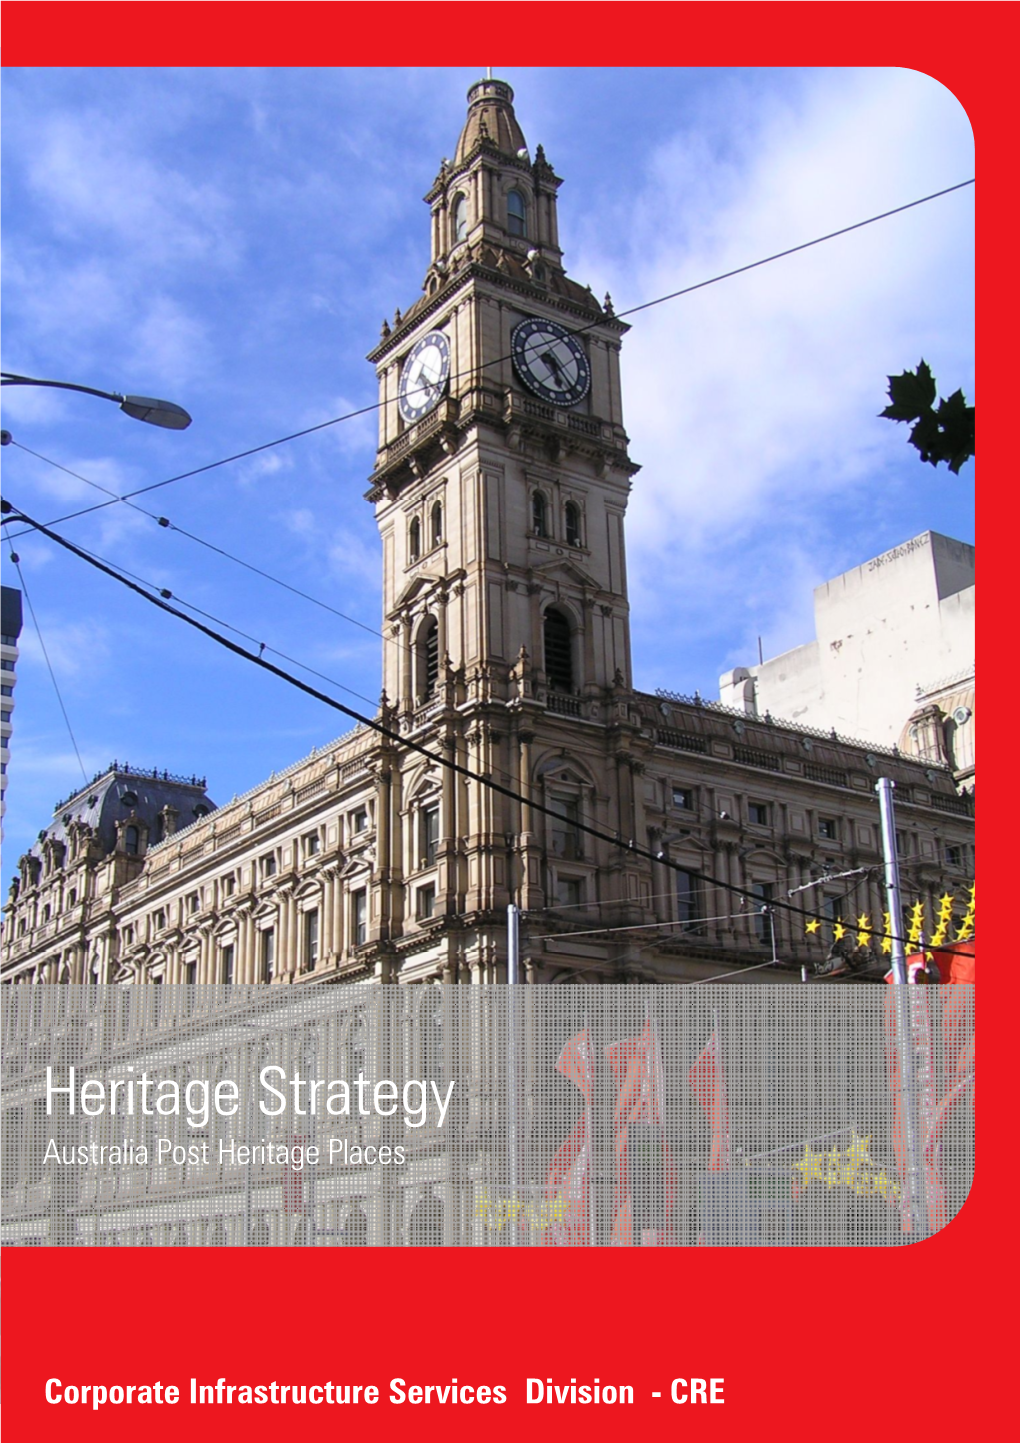 Australia Post Heritage Strategy